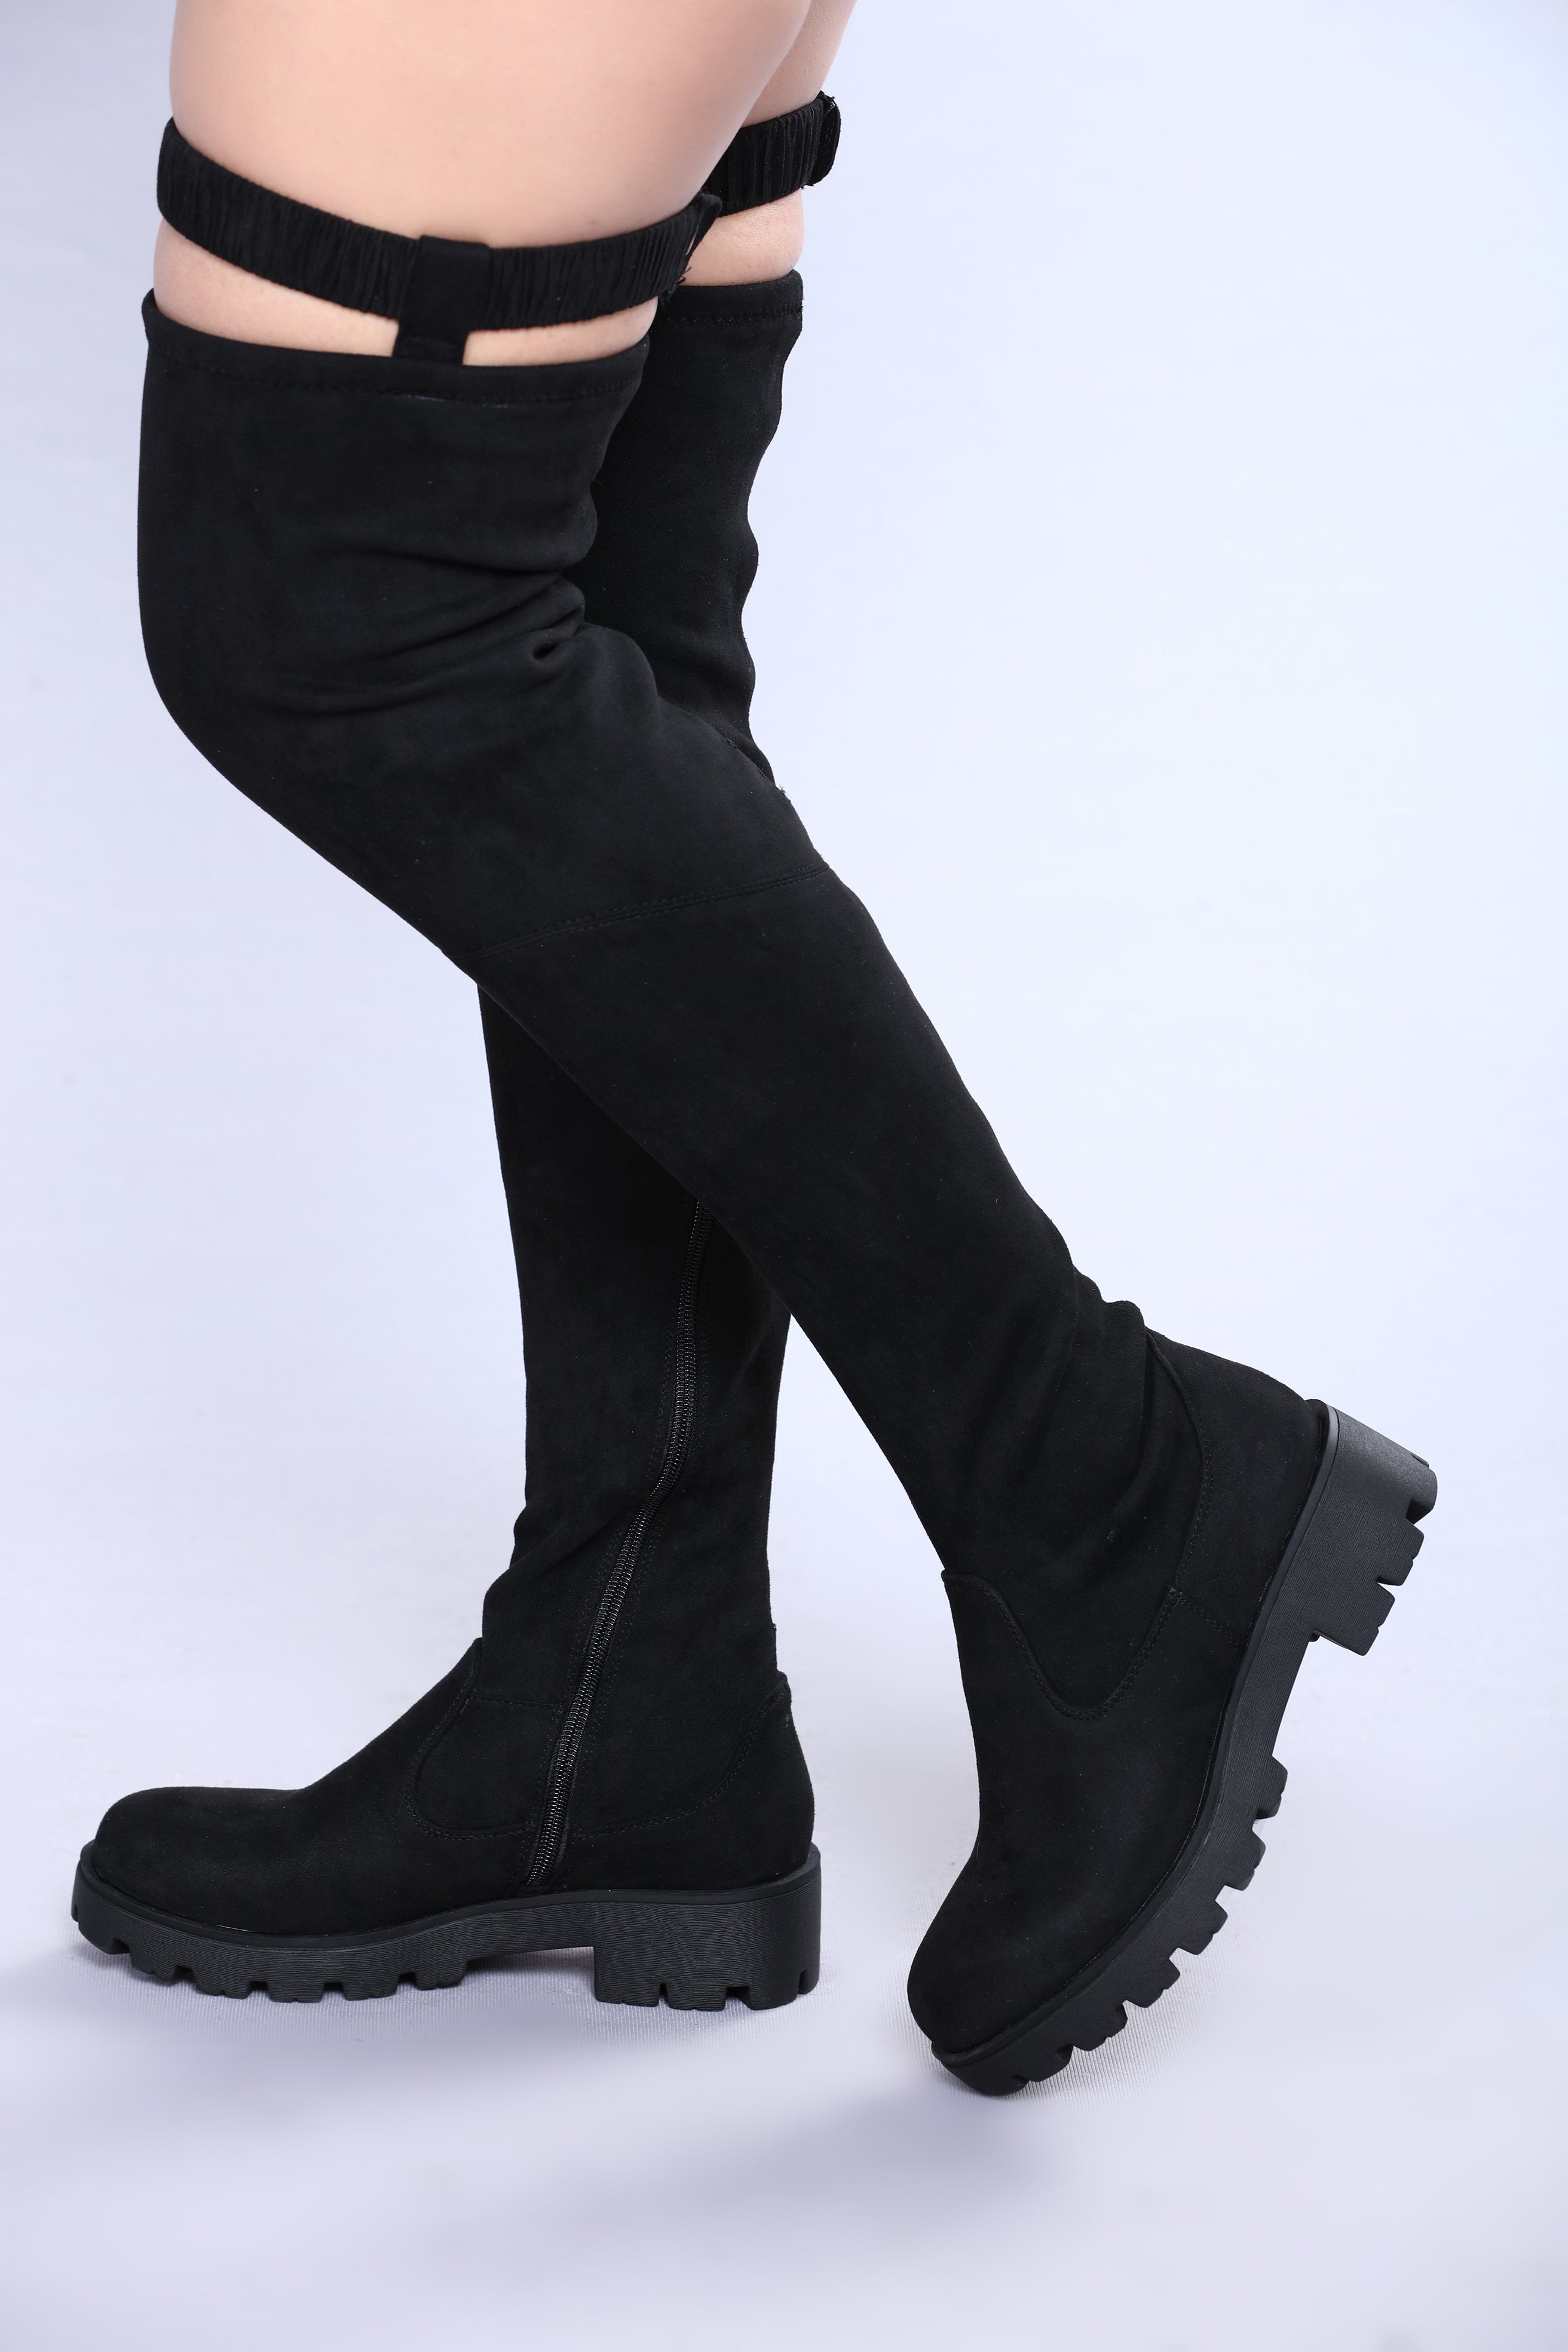 fashion nova over the knee boots